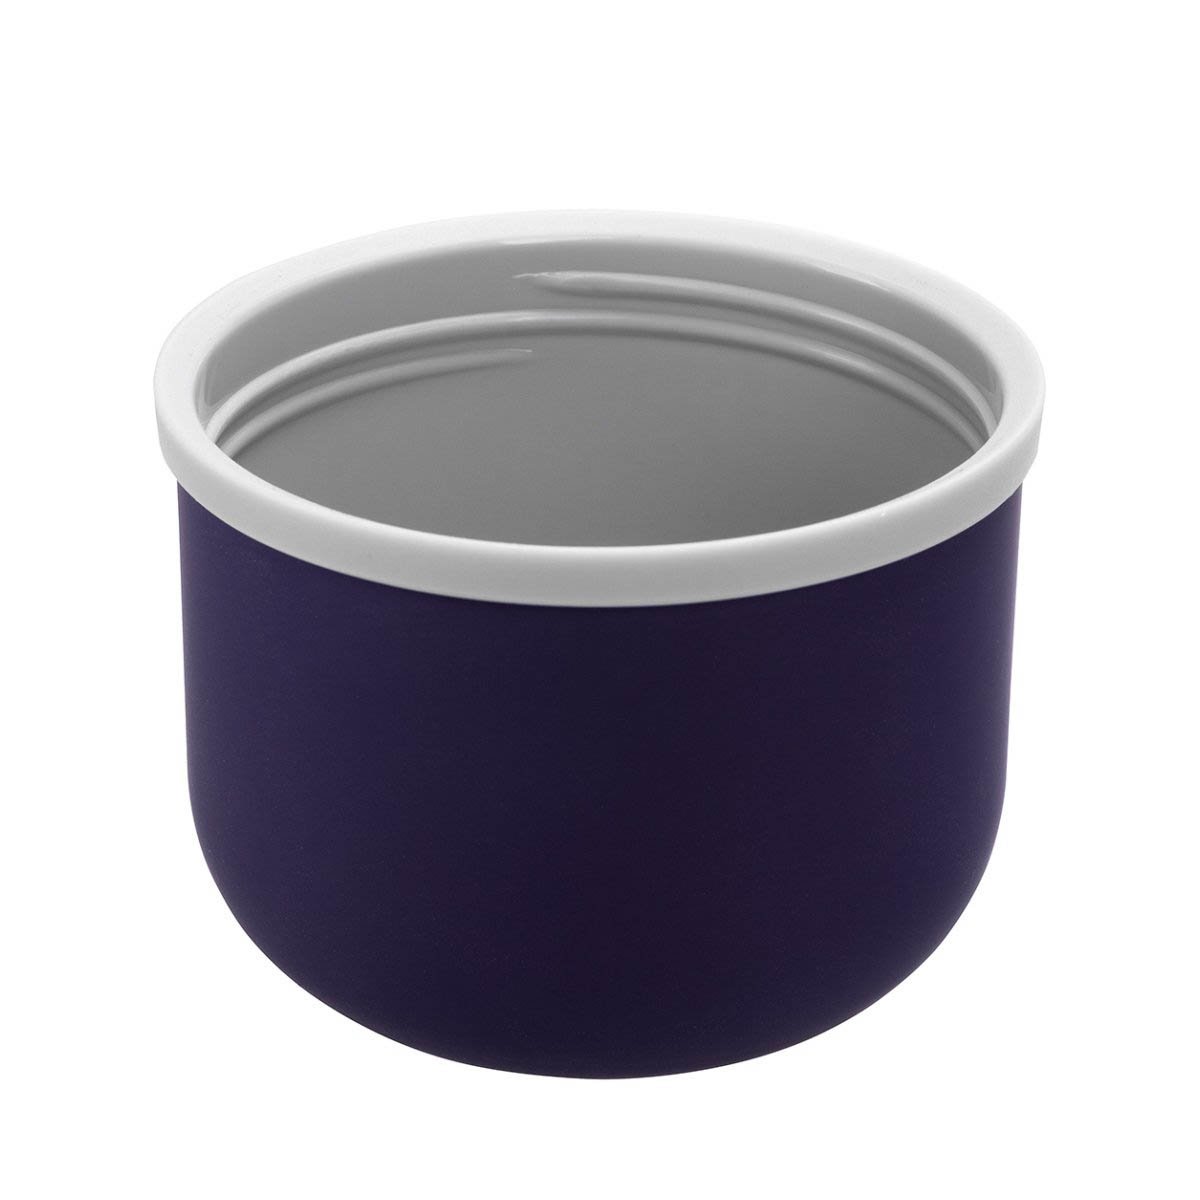 A purple lid cup